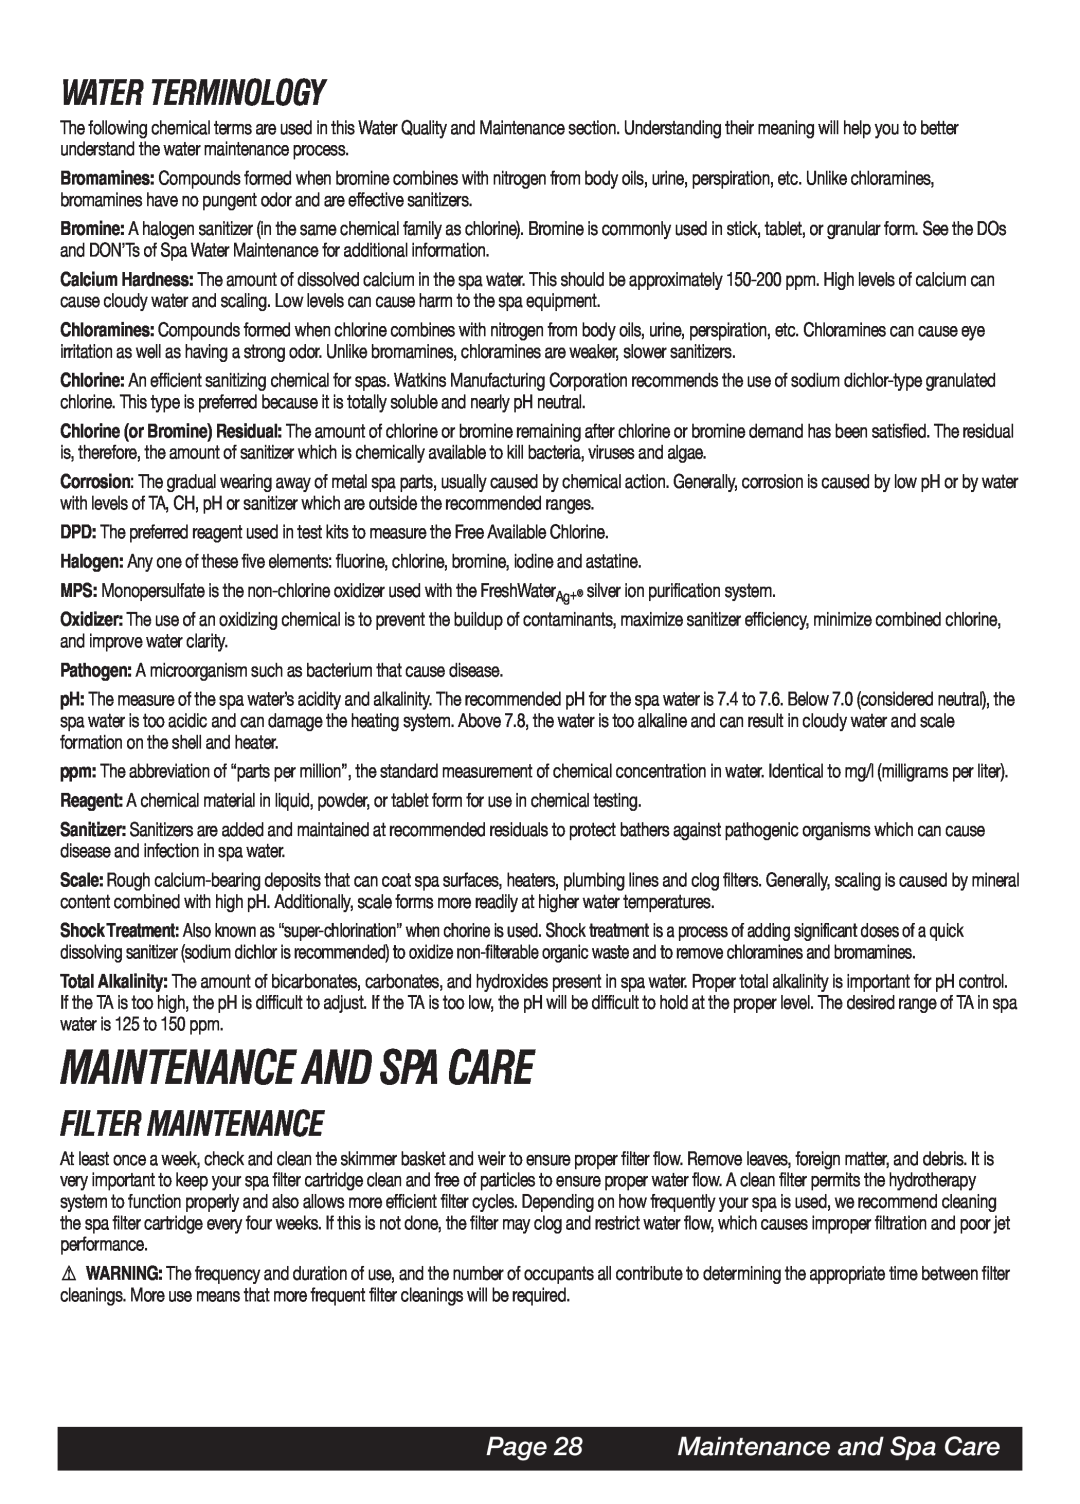 Watkins TRI, LAP, MAL, SOR Maintenance And Spa Care, Water Terminology, Filter Maintenance, Page 28 Maintenance and Spa Care 